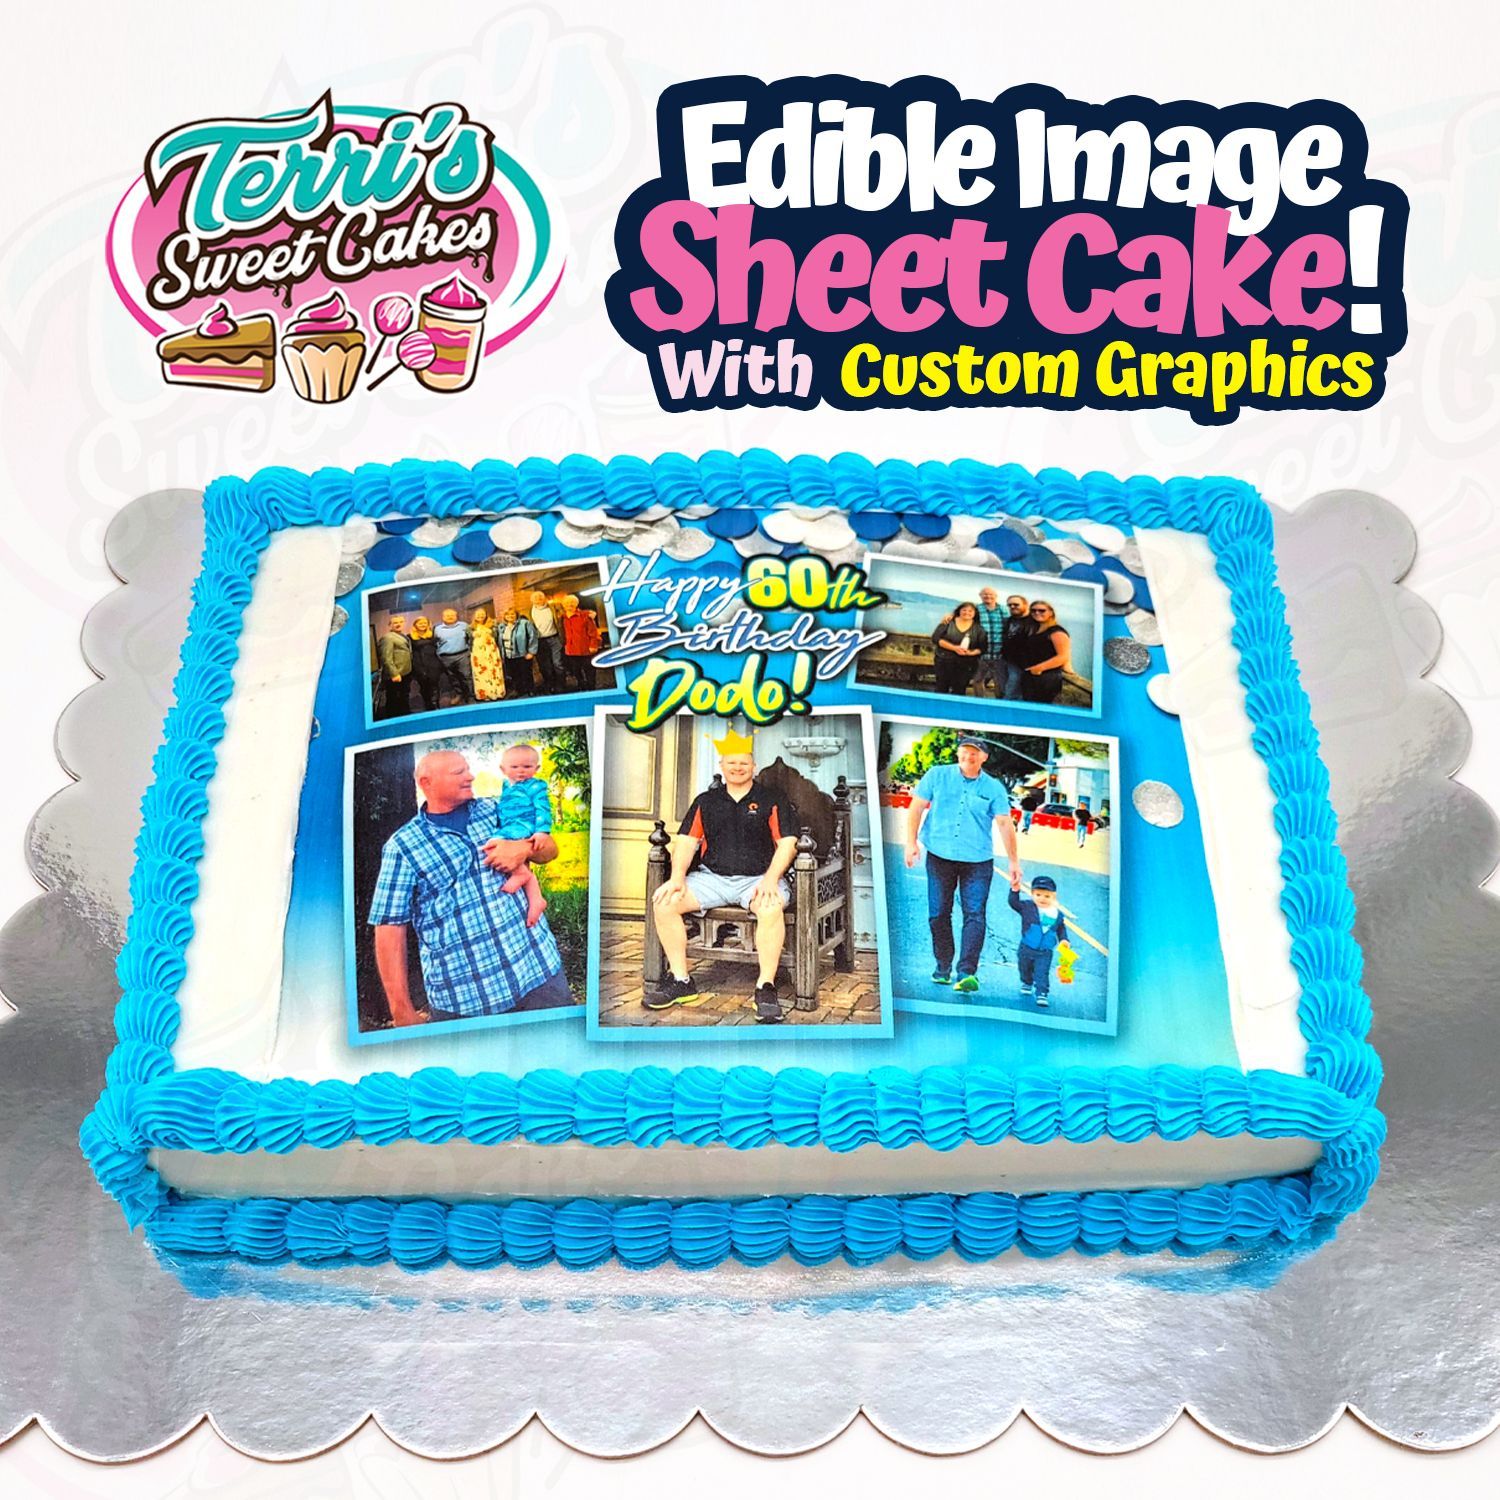 Edible Image Birthday Cake by Terri's Sweet Cake!